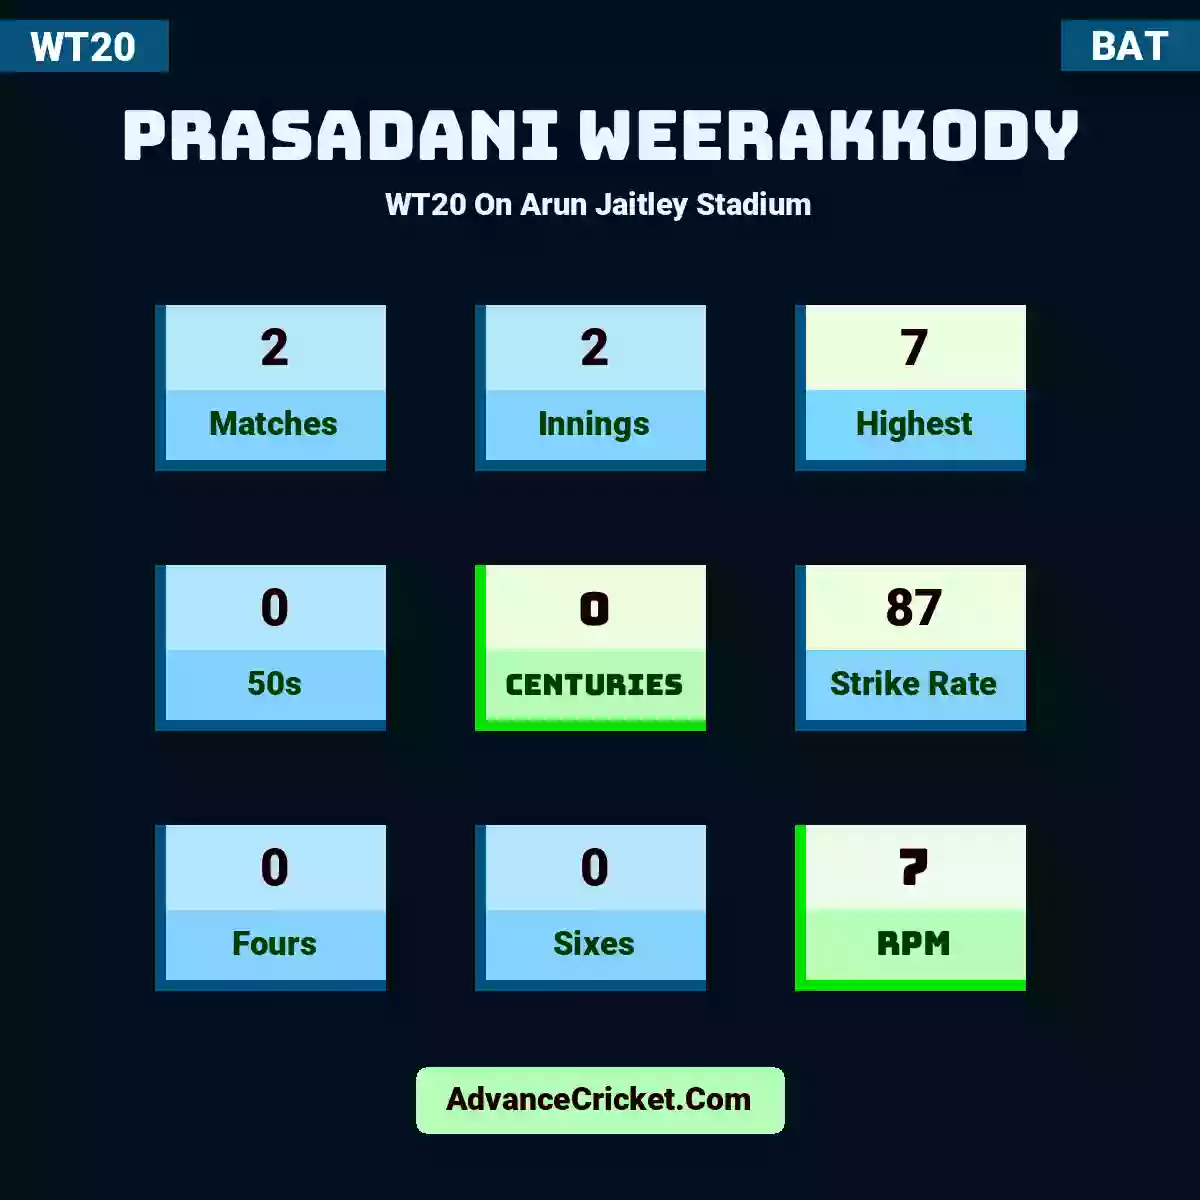 Prasadani Weerakkody WT20  On Arun Jaitley Stadium, Prasadani Weerakkody played 2 matches, scored 7 runs as highest, 0 half-centuries, and 0 centuries, with a strike rate of 87. P.Weerakkody hit 0 fours and 0 sixes, with an RPM of 7.